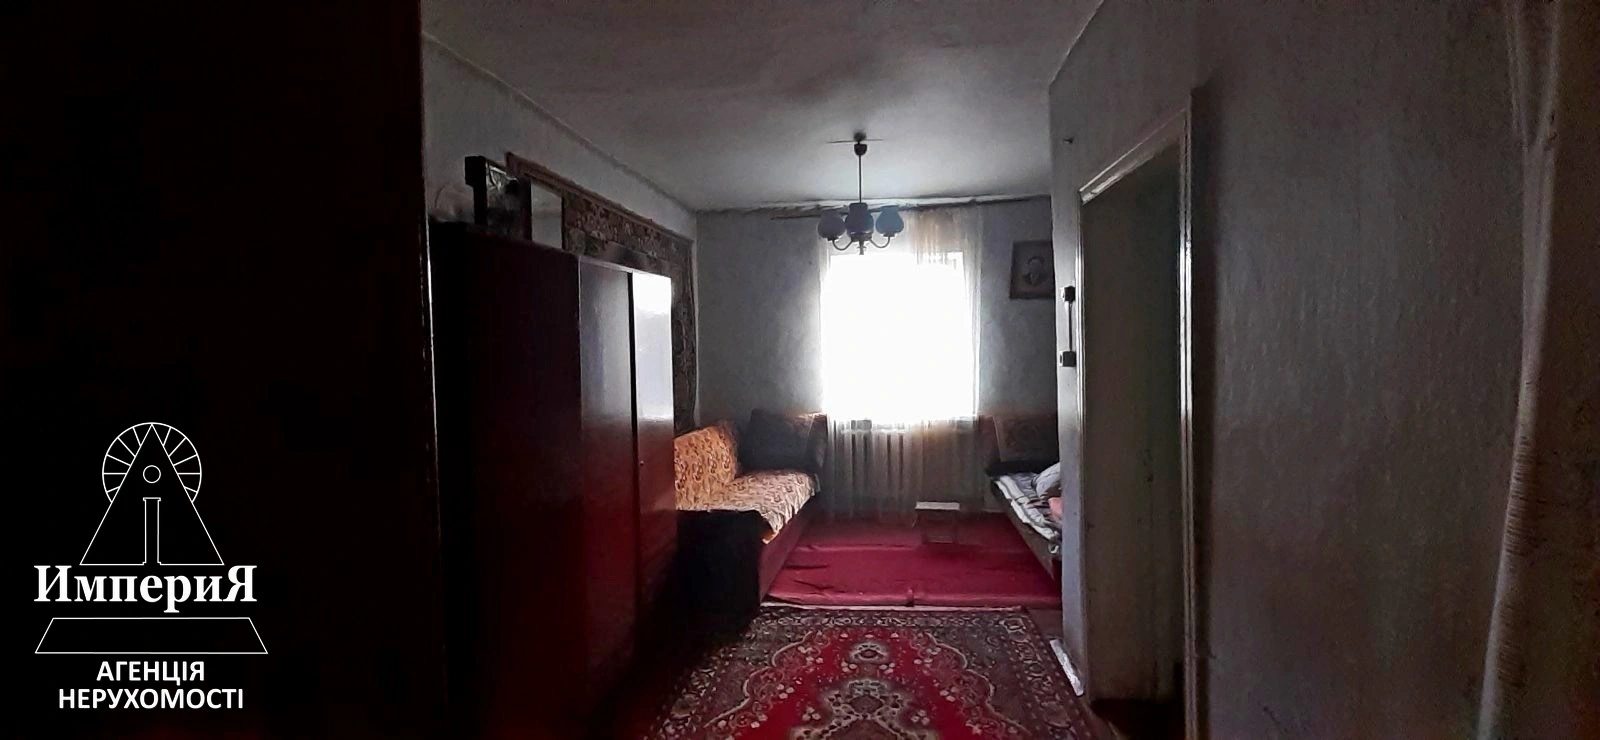 House for sale. Tarasivka. 